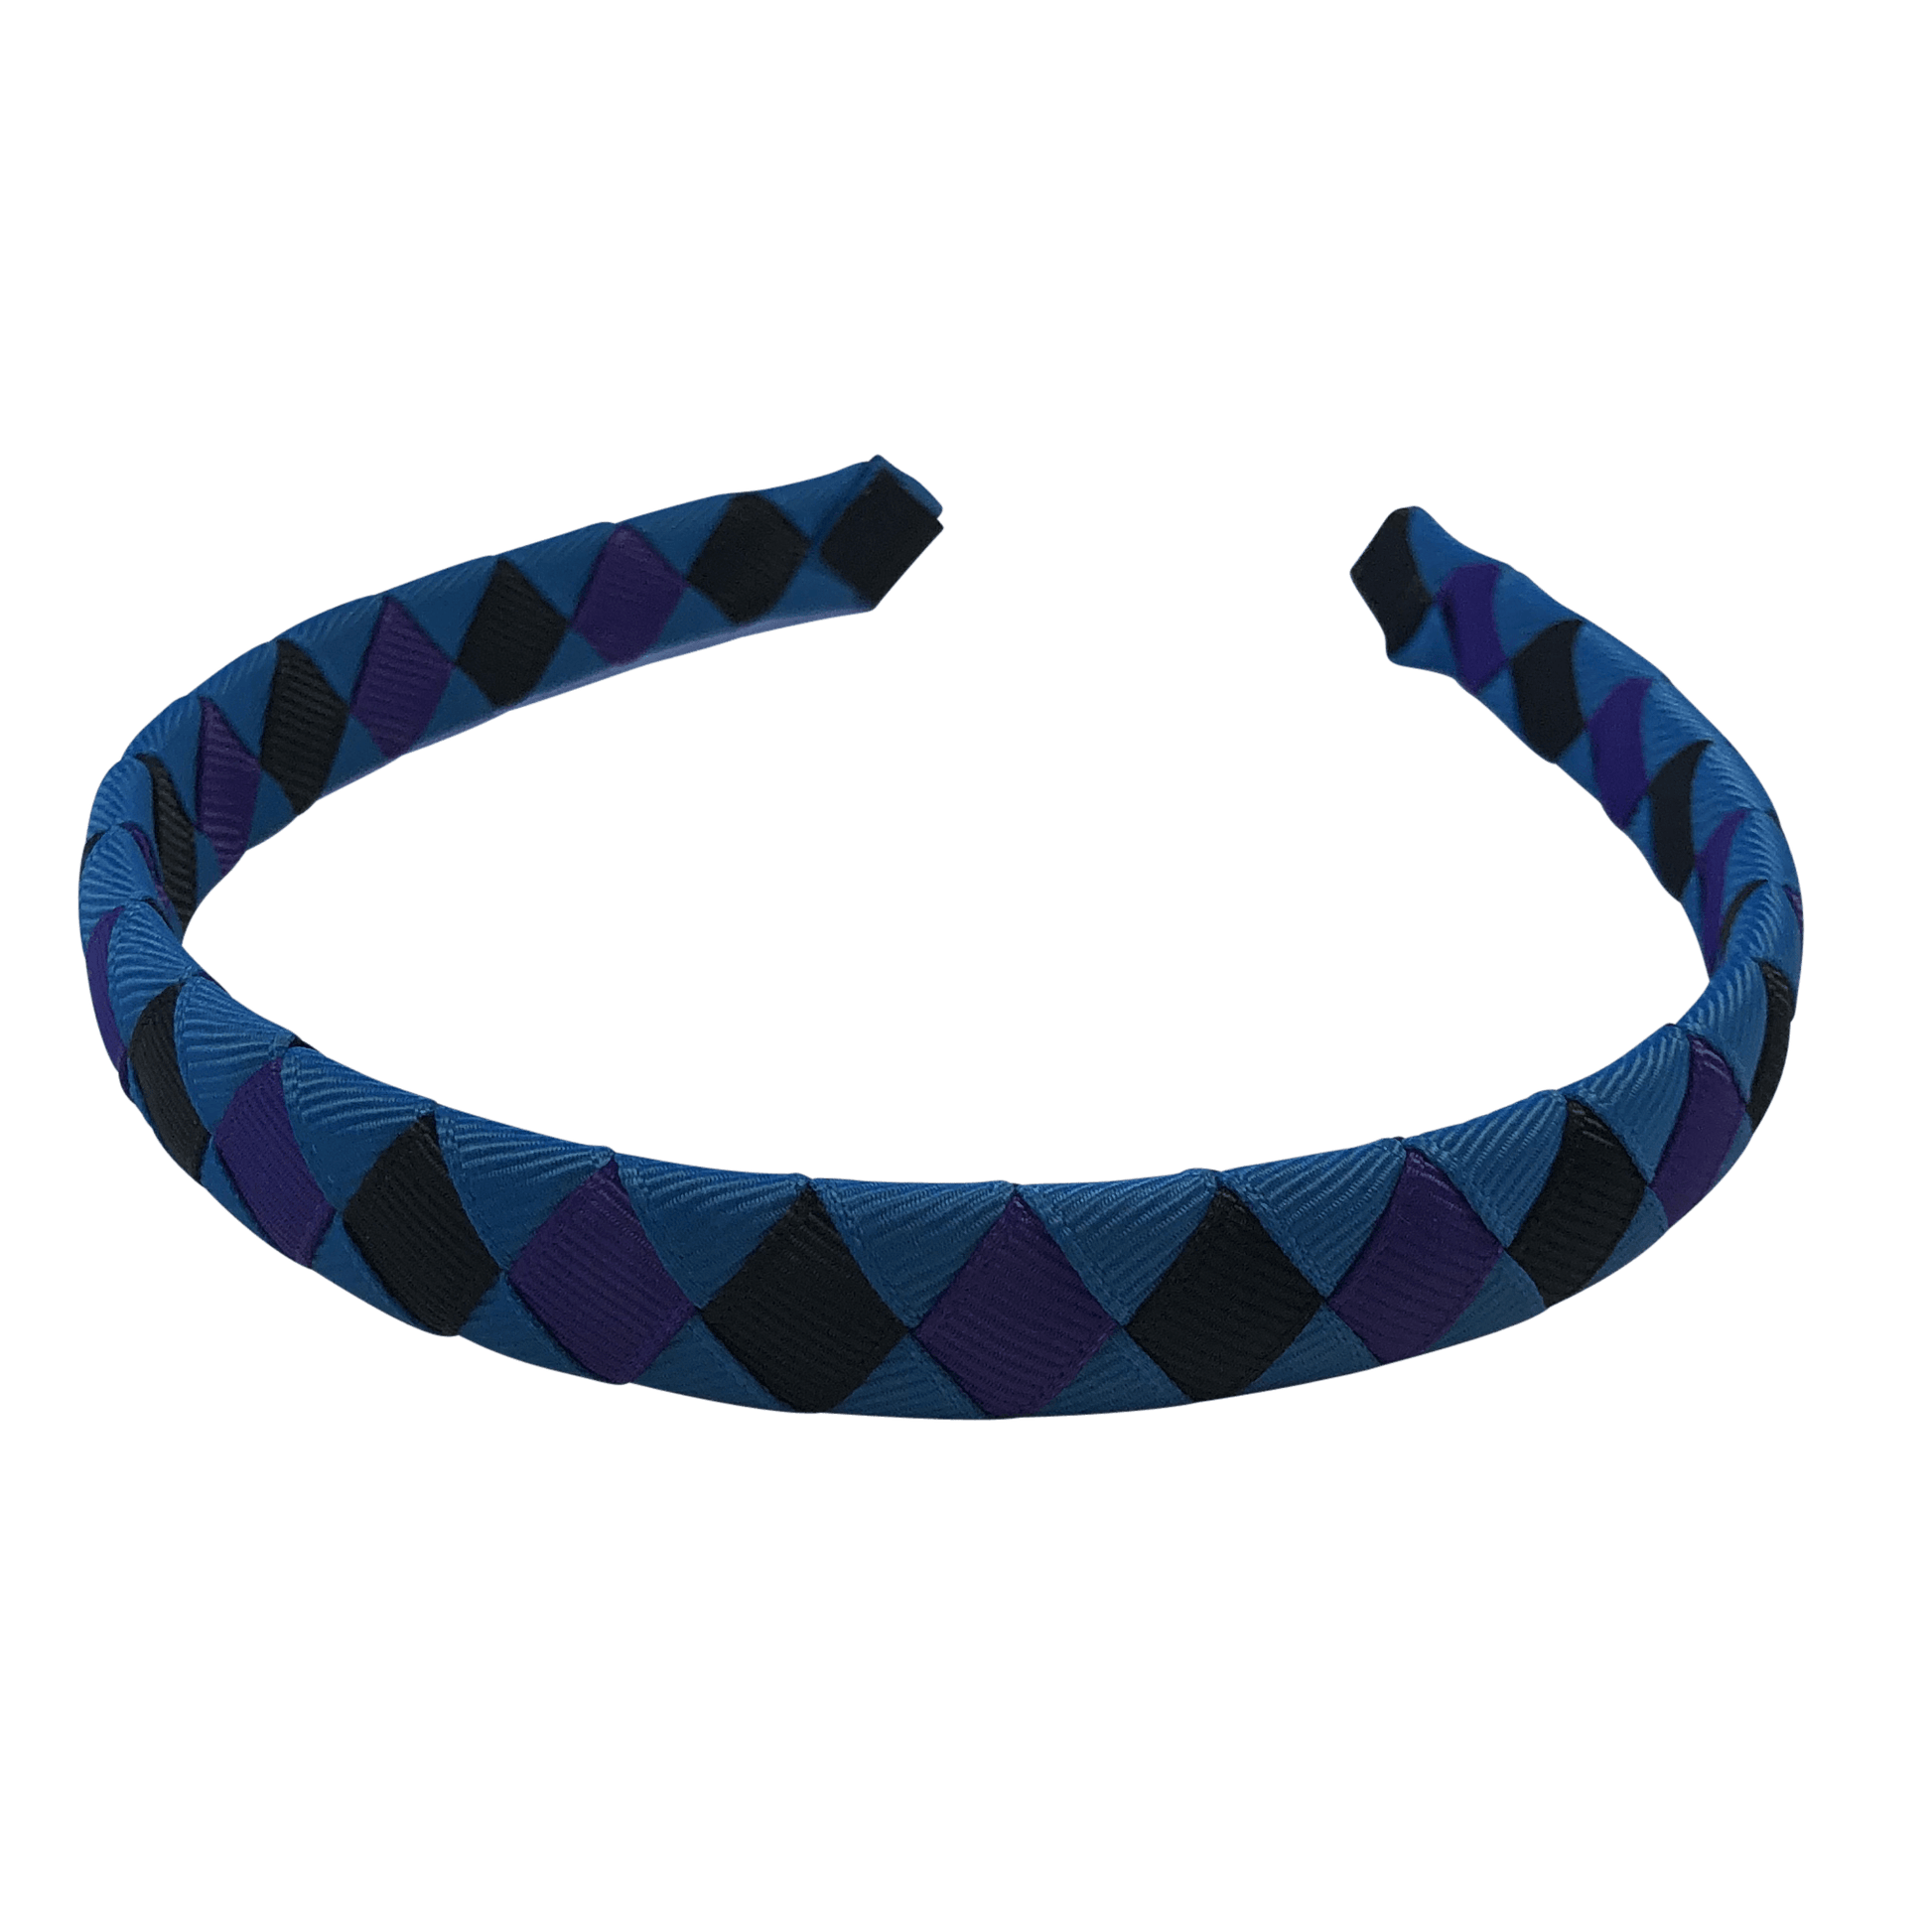 Sea Blue, Purple, & Black Hair Accessories - Assorted Hair Accessories - School Uniform Hair Accessories - Ponytails and Fairytales